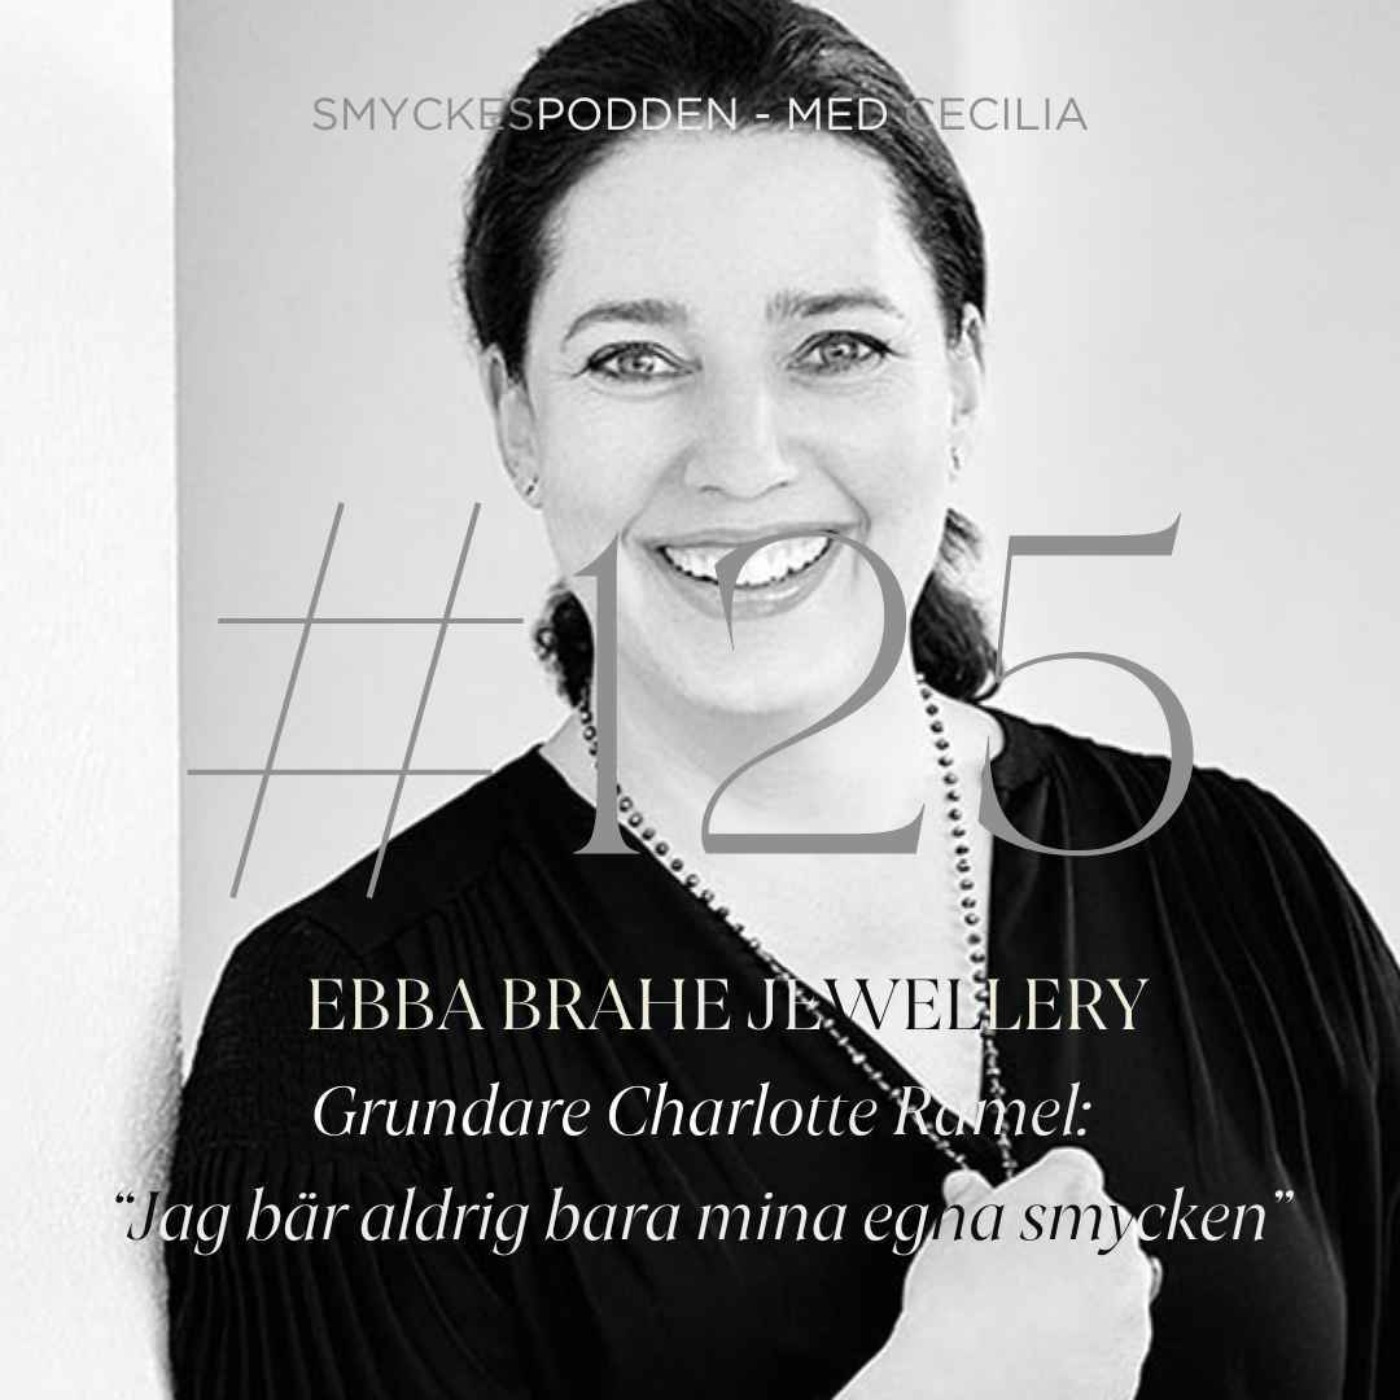 125. Ebba Brahe Jewellery's grundare Charlotte Ramel: 